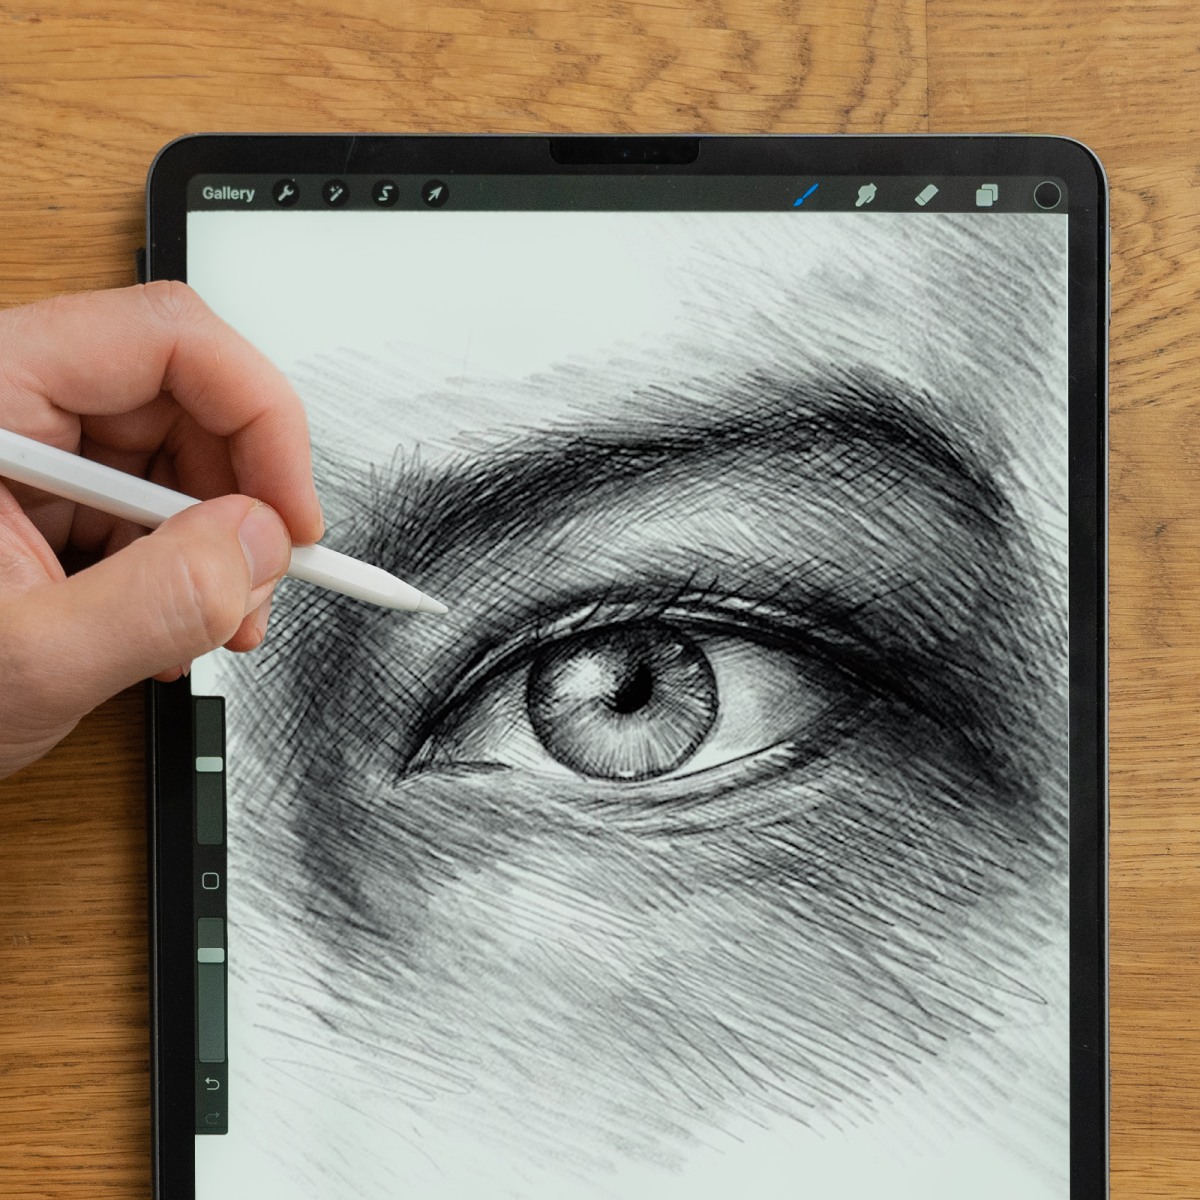 159 Sketch On Ipad Pro Images, Stock Photos & Vectors | Shutterstock